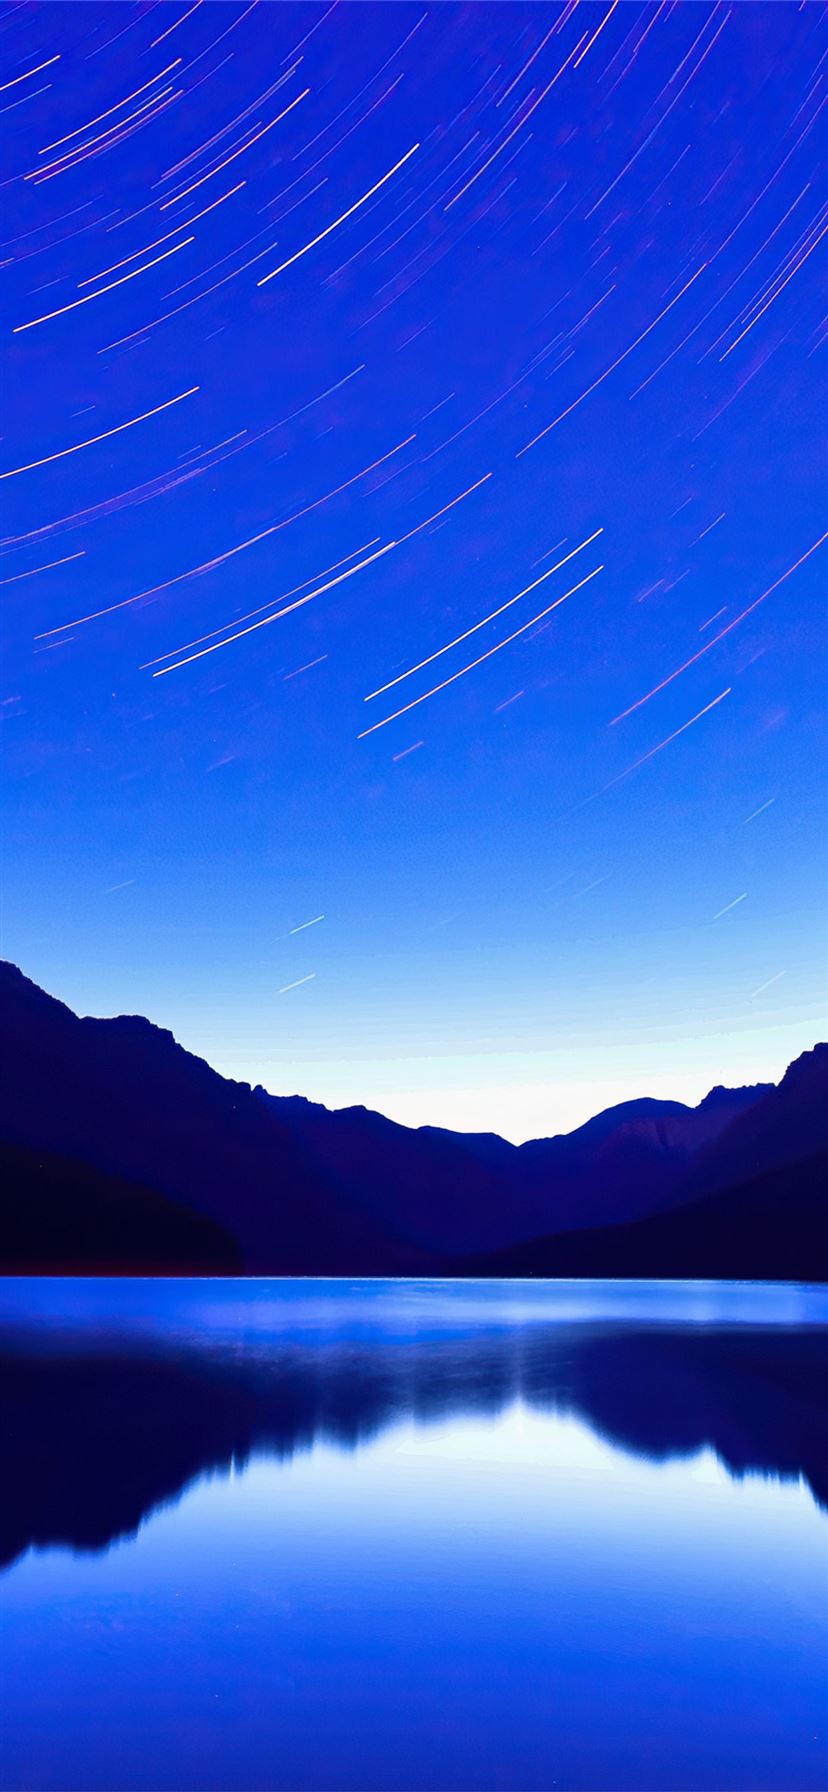 Blue Lake Star Trails 4k iPhone Wallpaper